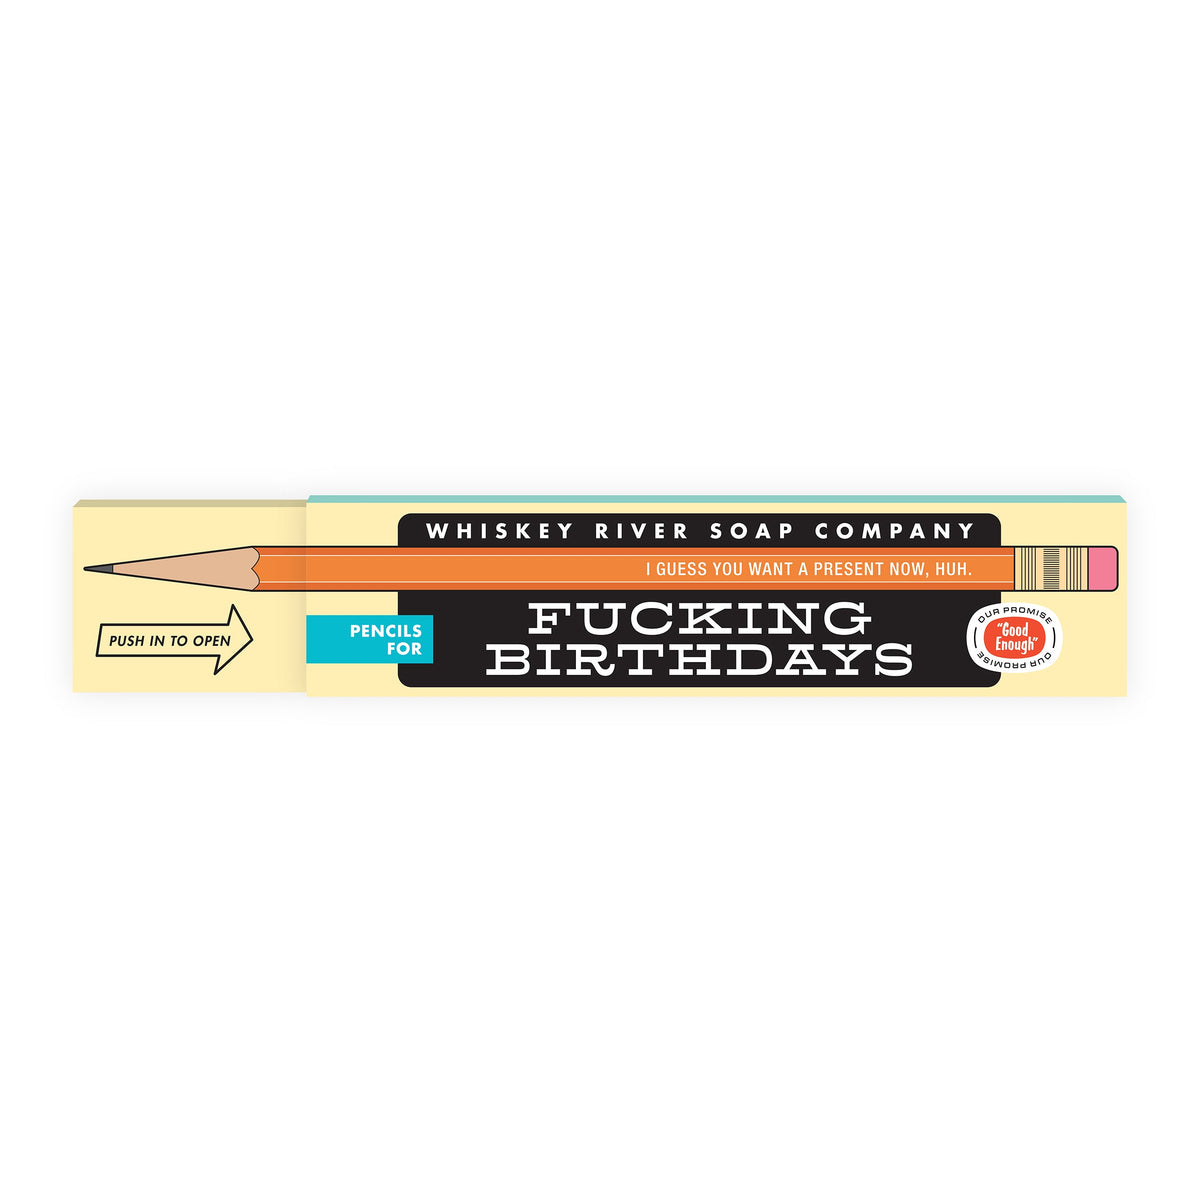 Pencils for F*cking Birthdays